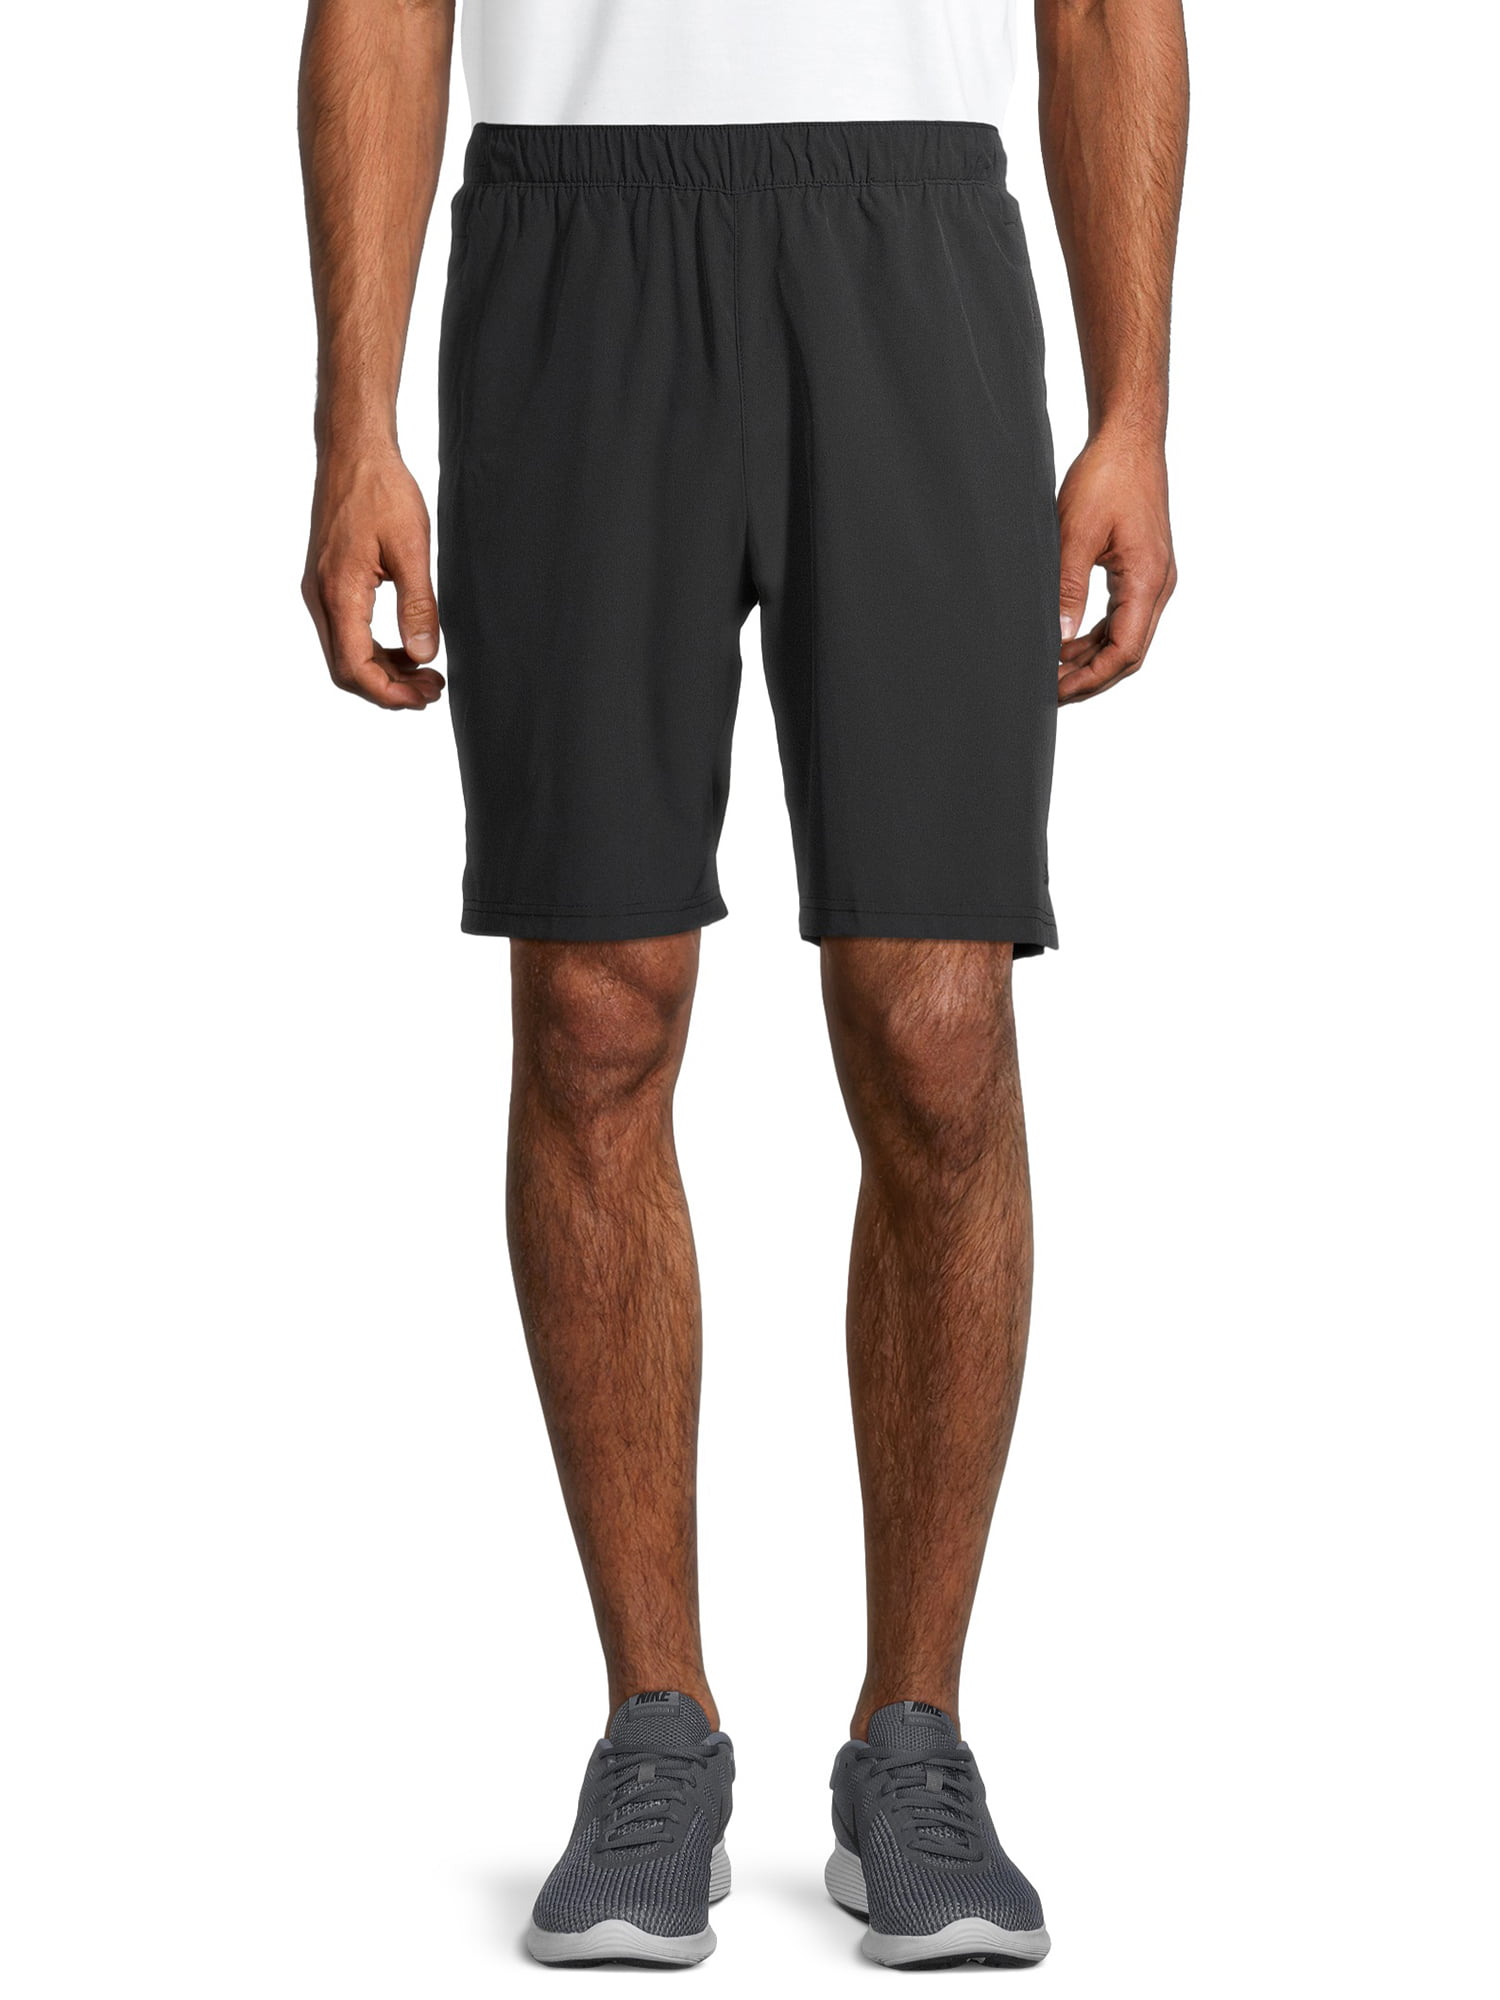 Layer 8 Men's Woven Stretch Athletic Shorts - Walmart.com